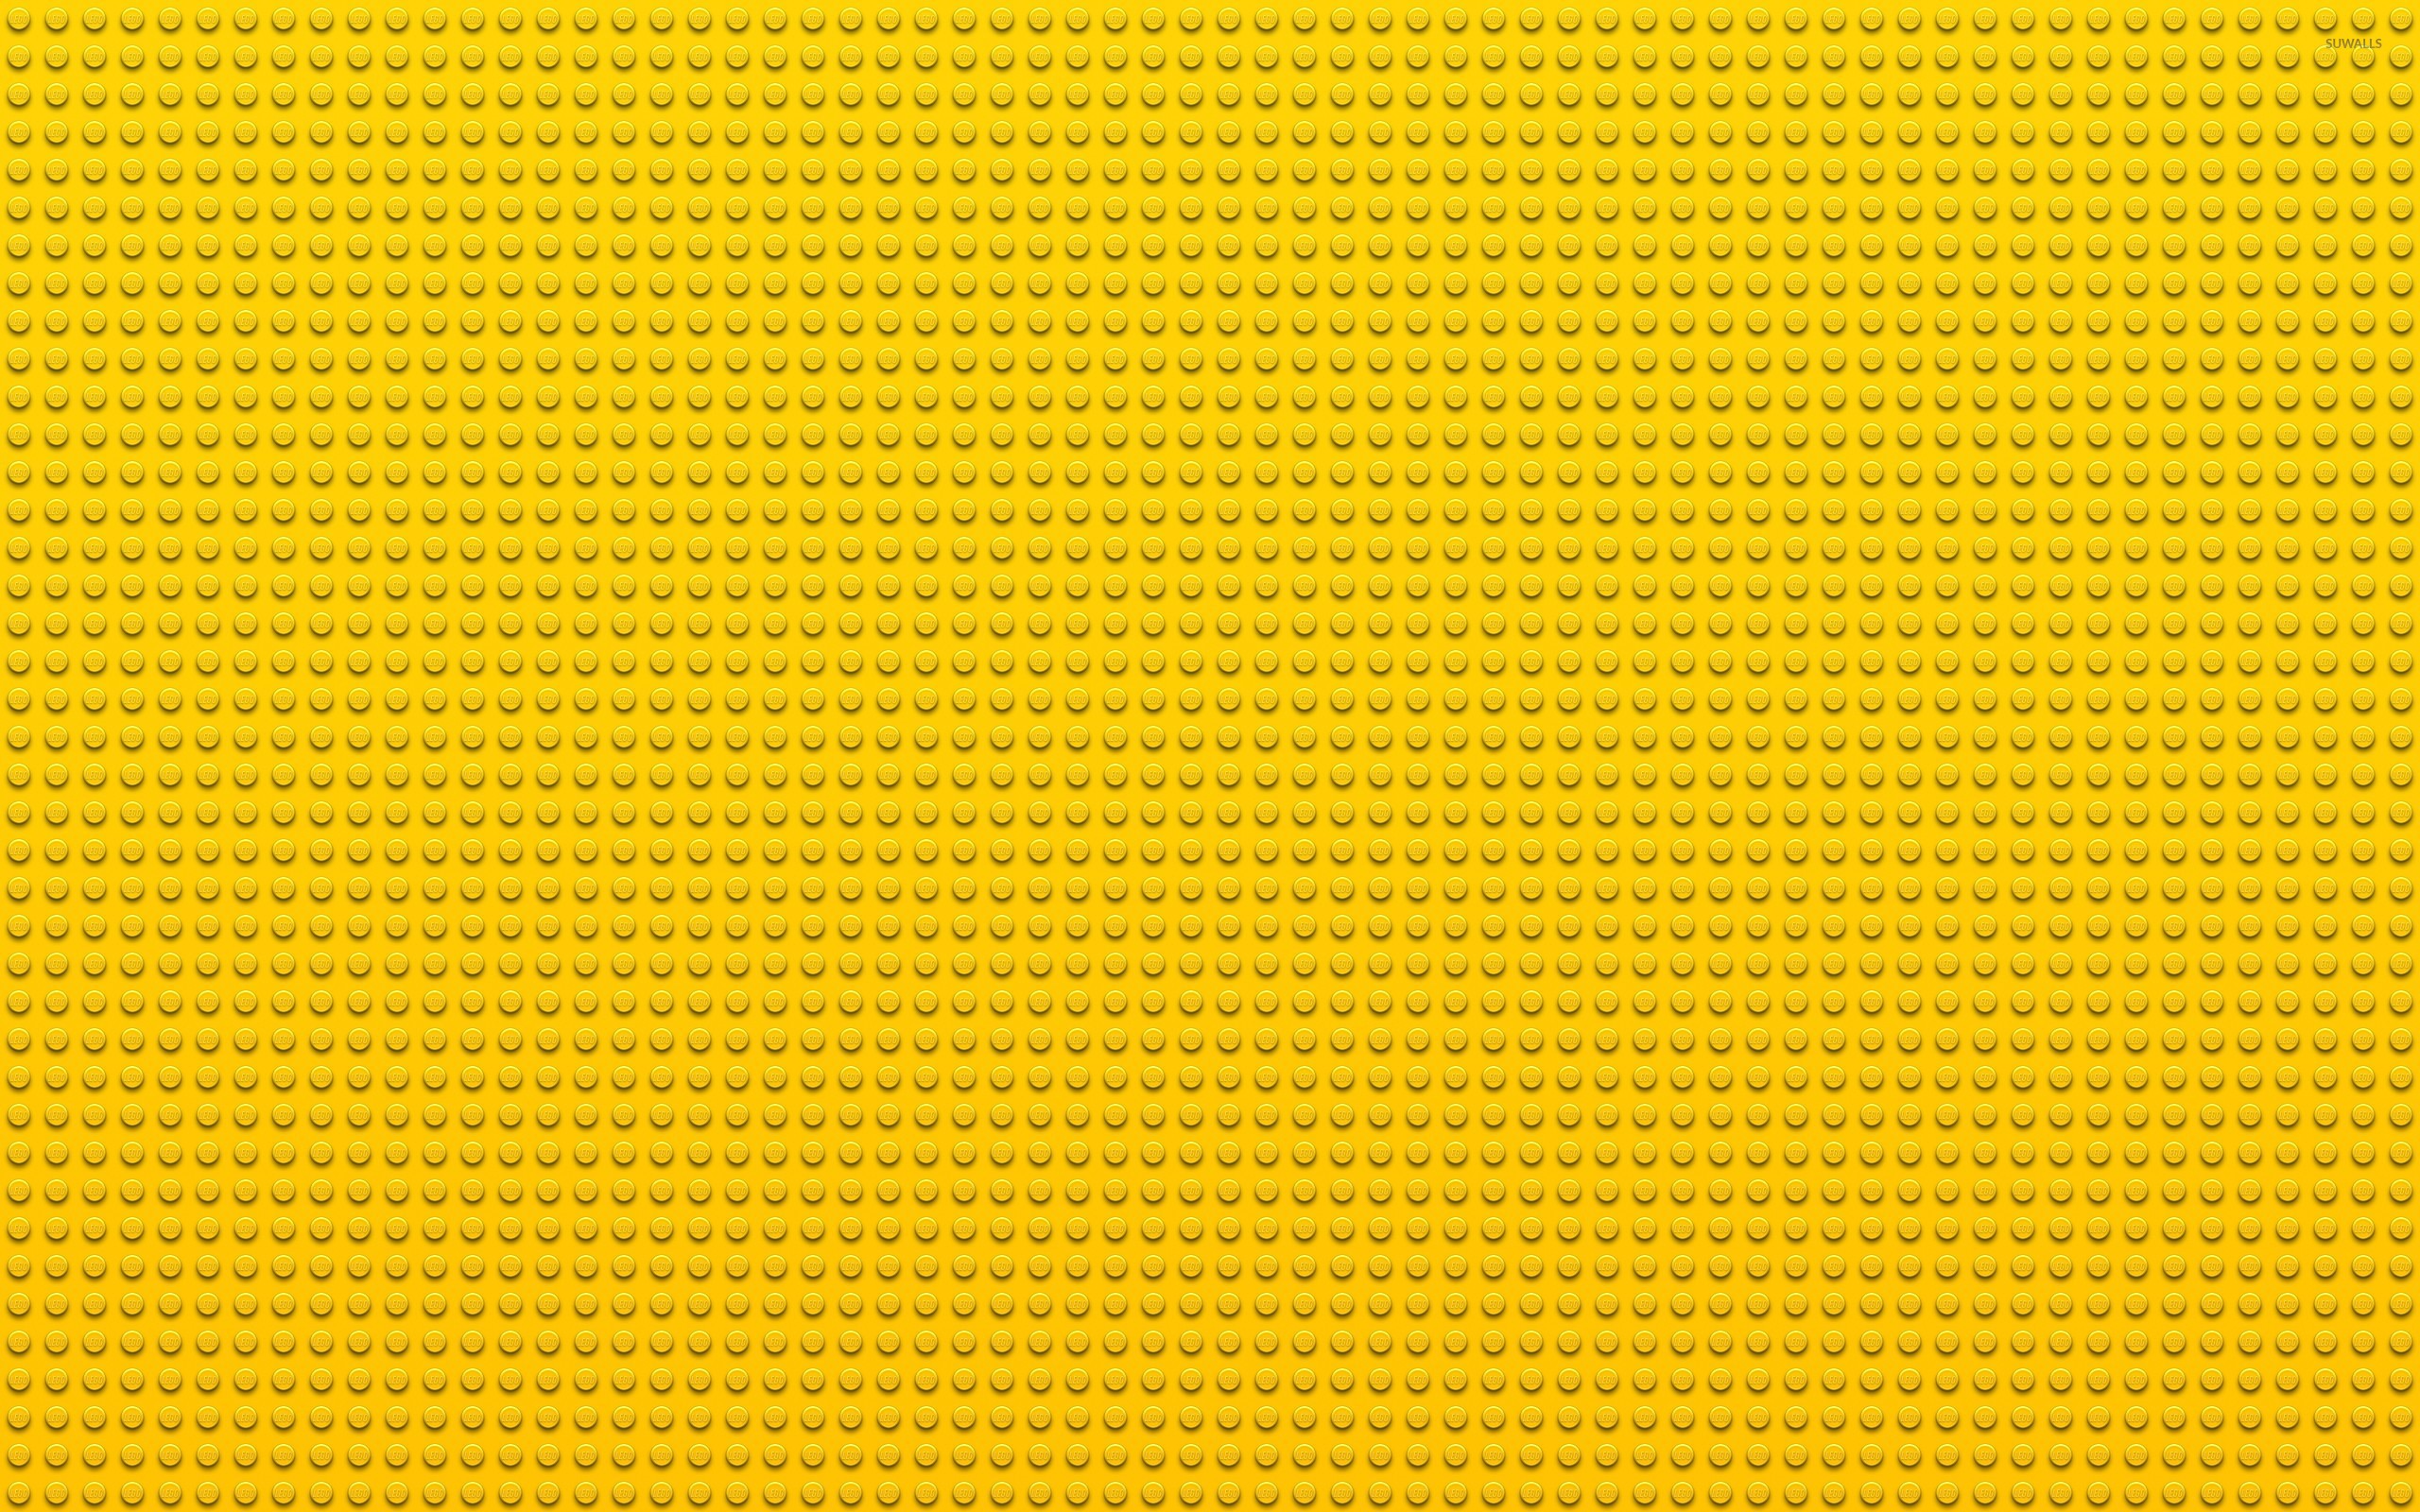 Lego Bricks Background Yellow Wallpaper